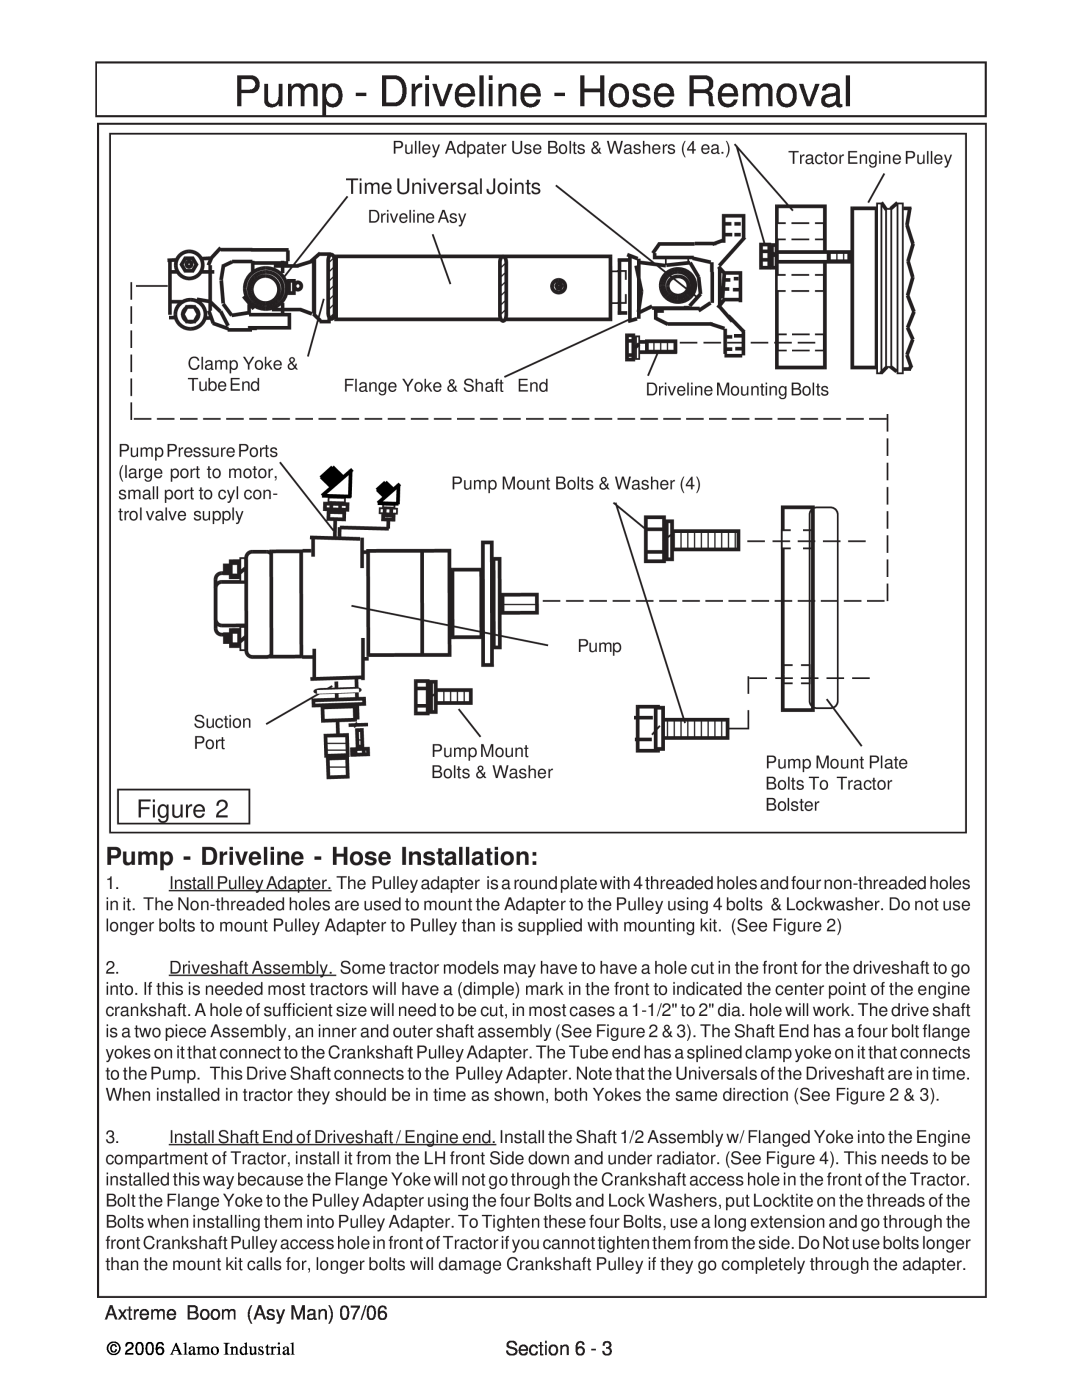 Alamo 02984405 instruction manual Pump - Driveline - Hose Installation, 23456, Pump - Driveline - Hose Removal, Section 